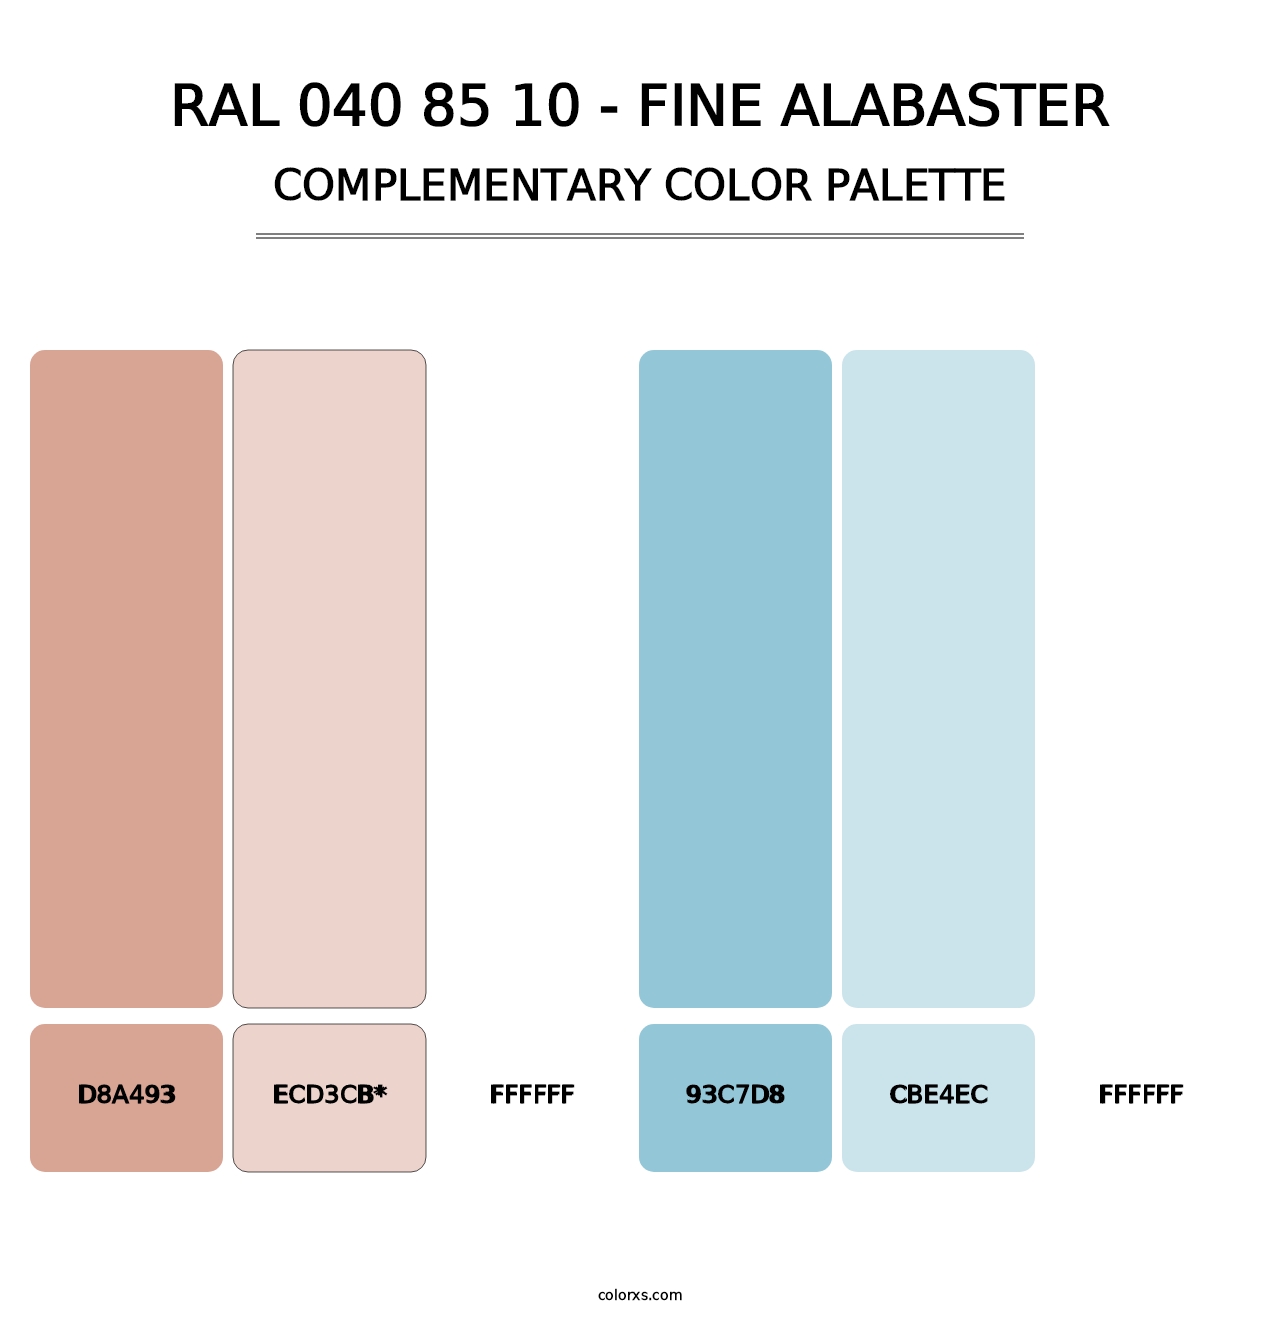 RAL 040 85 10 - Fine Alabaster - Complementary Color Palette